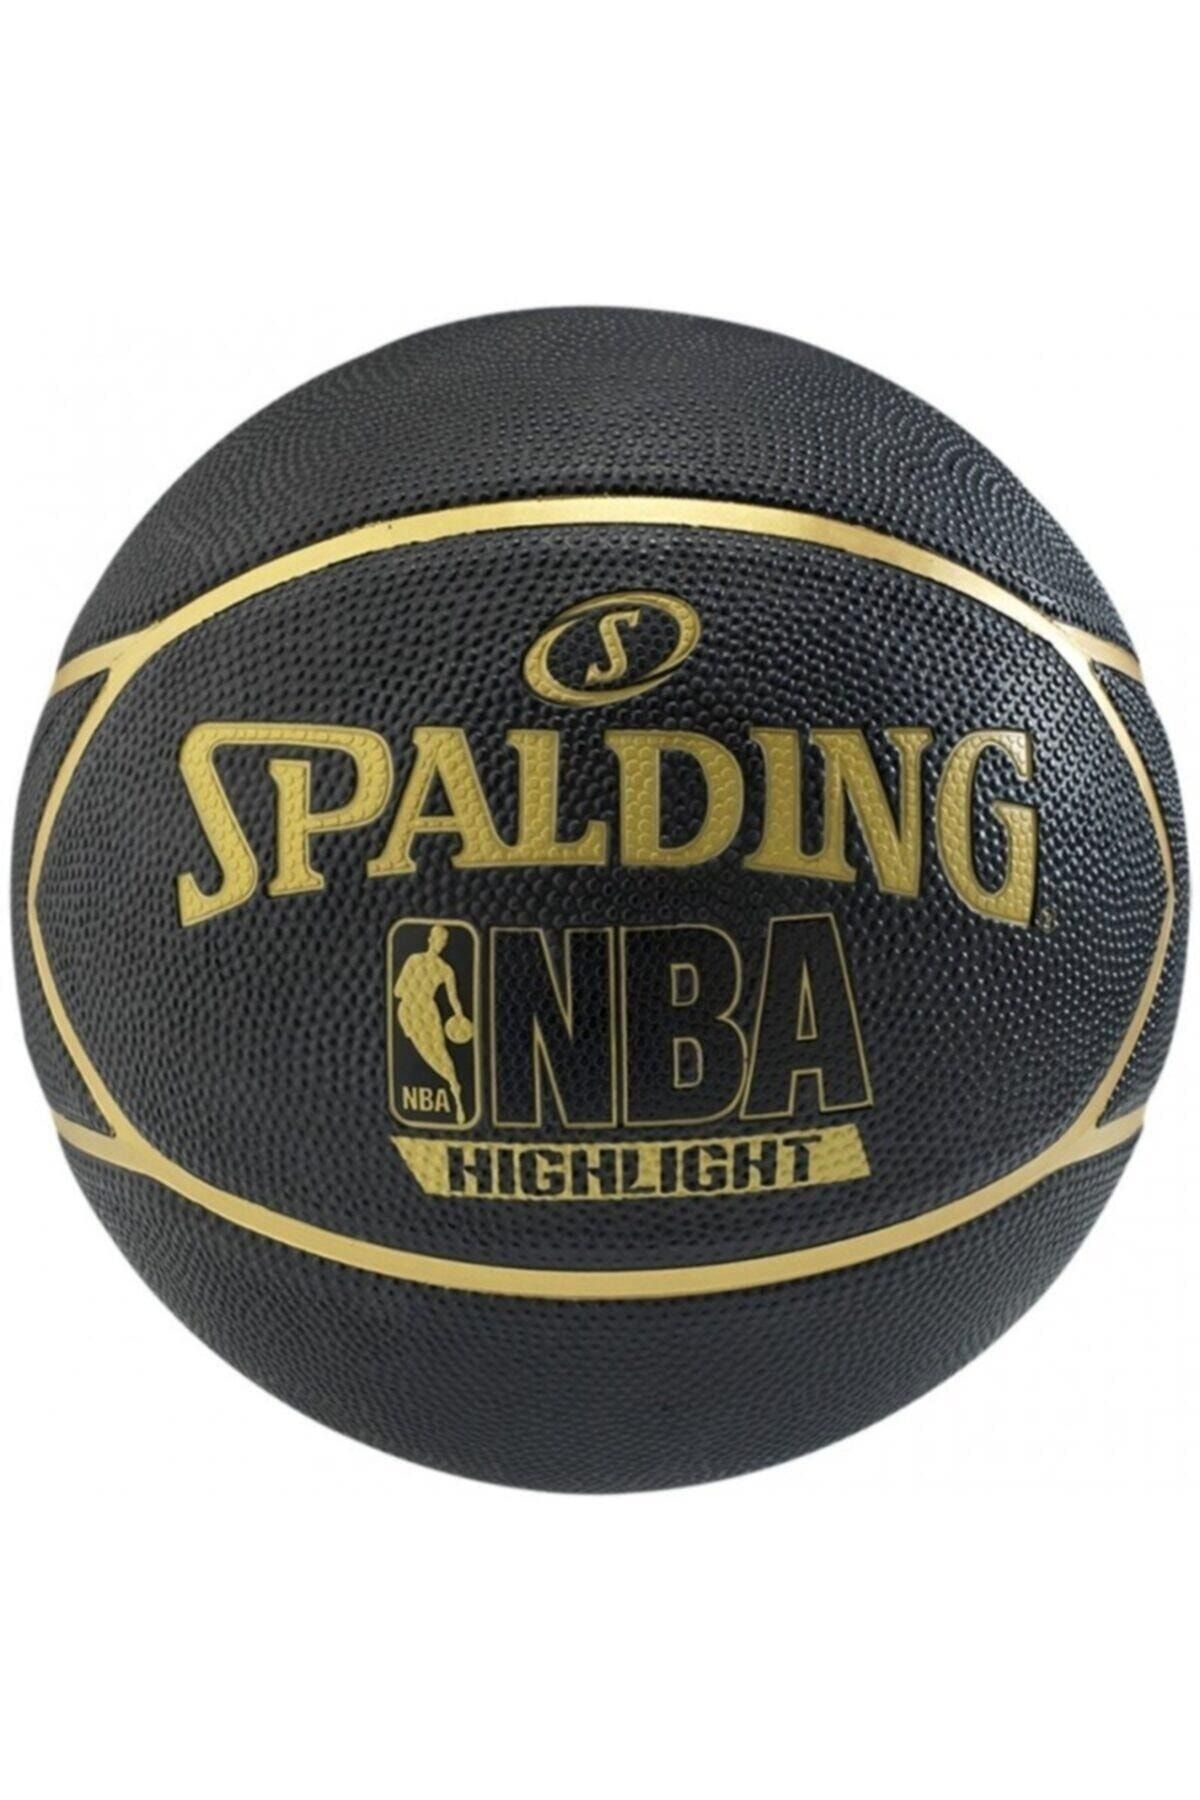 Spalding Basketbol Topu Highlight Black Gold No: 7